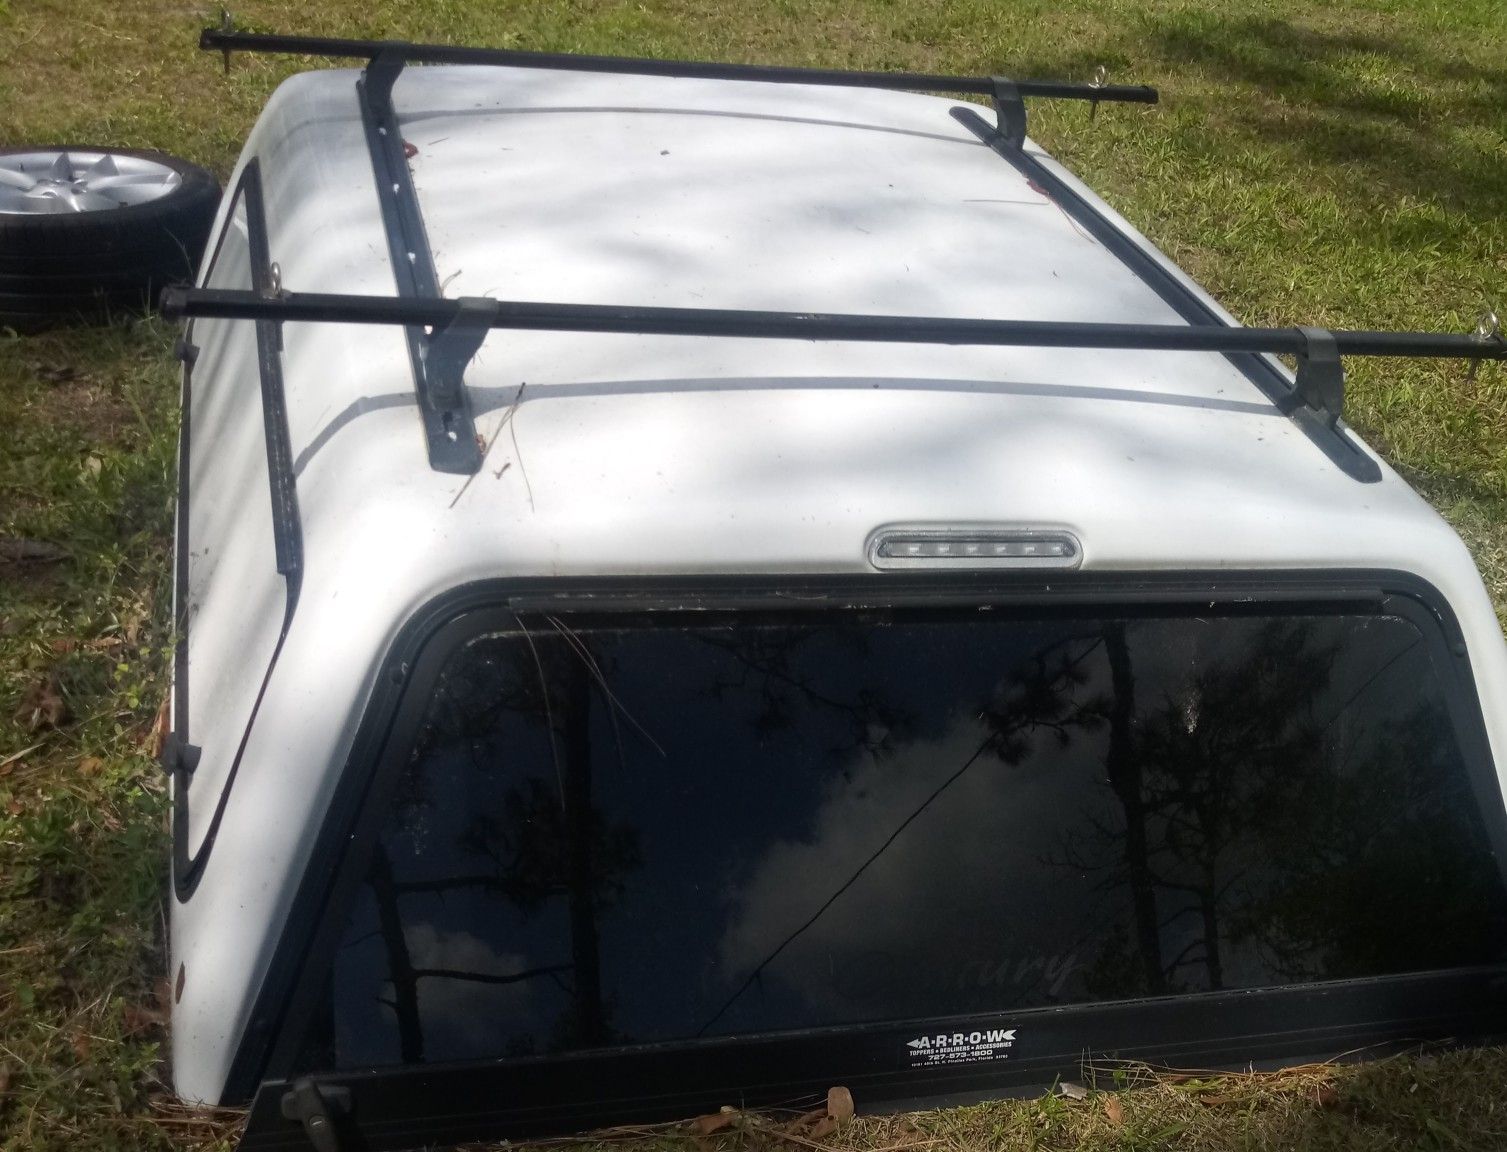 Camper top for a short bed truck